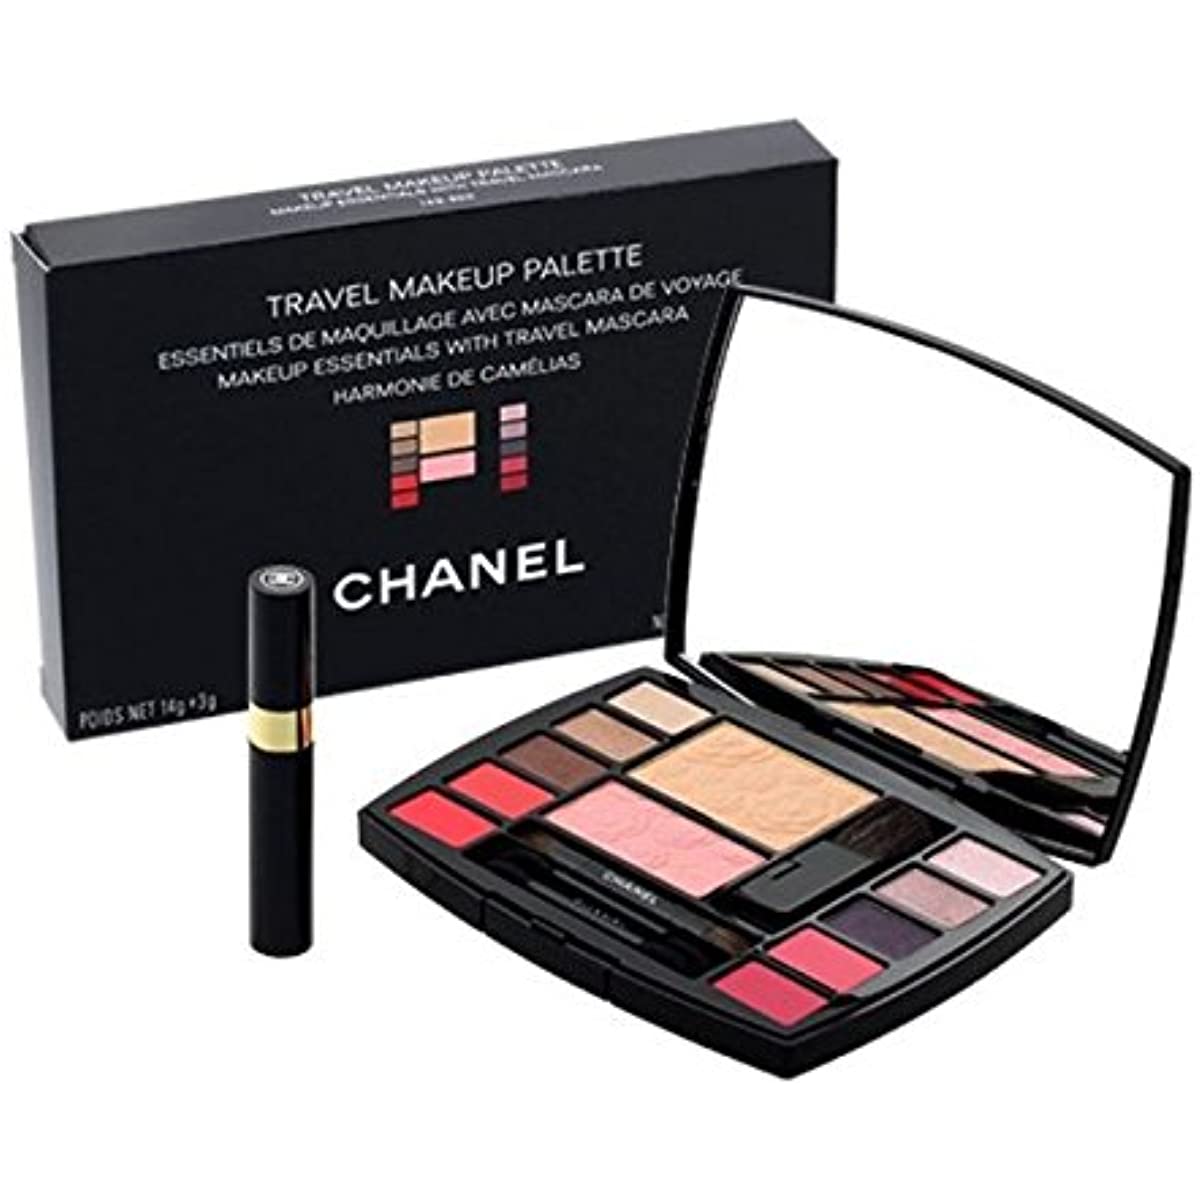 chanel makeup palette